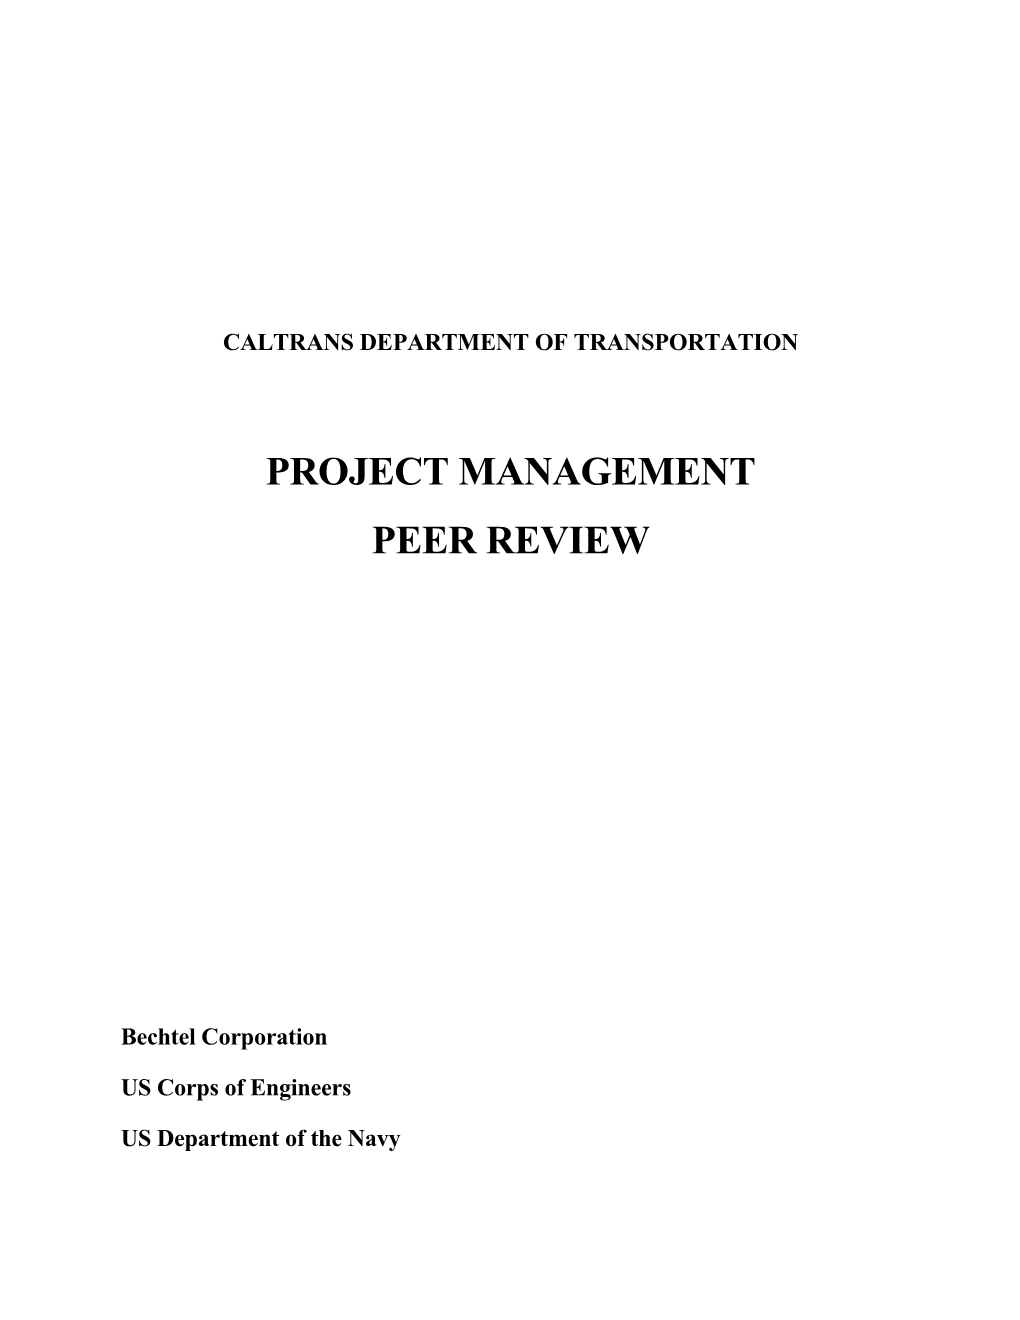 Caltrans Department of Transportation